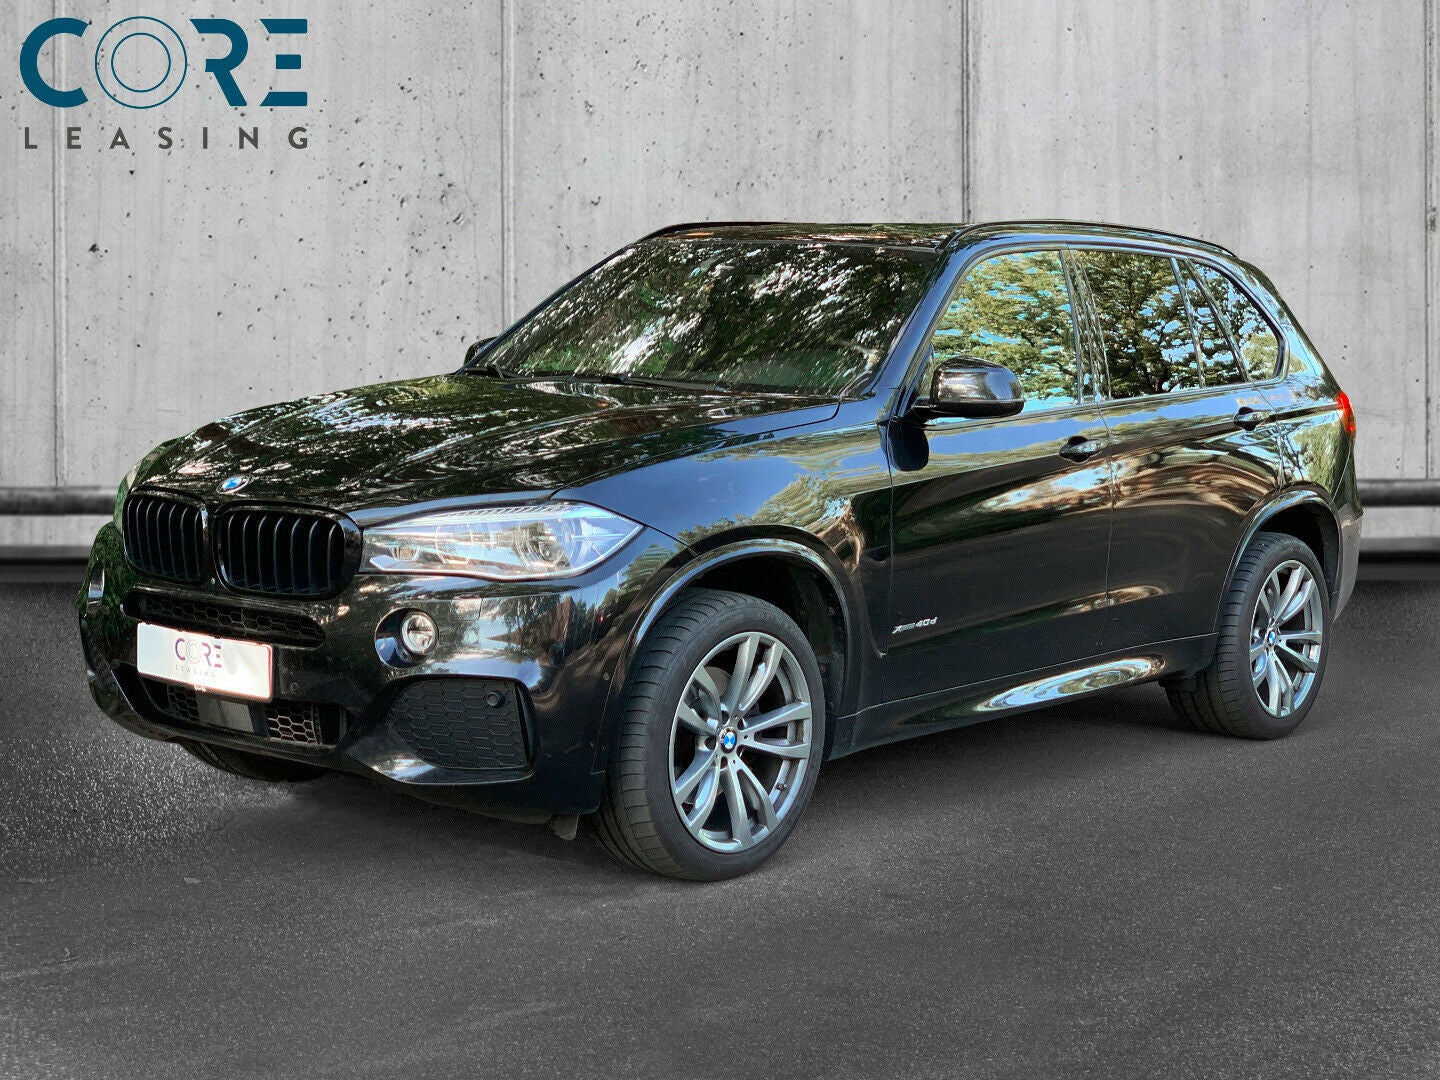 Sortmetal BMW X5 xDrive40d M-Sport aut. 7prs fra 2016 parkeret foran en betonmur. CORE Leasing A/S er eksperter i BMW leasing.